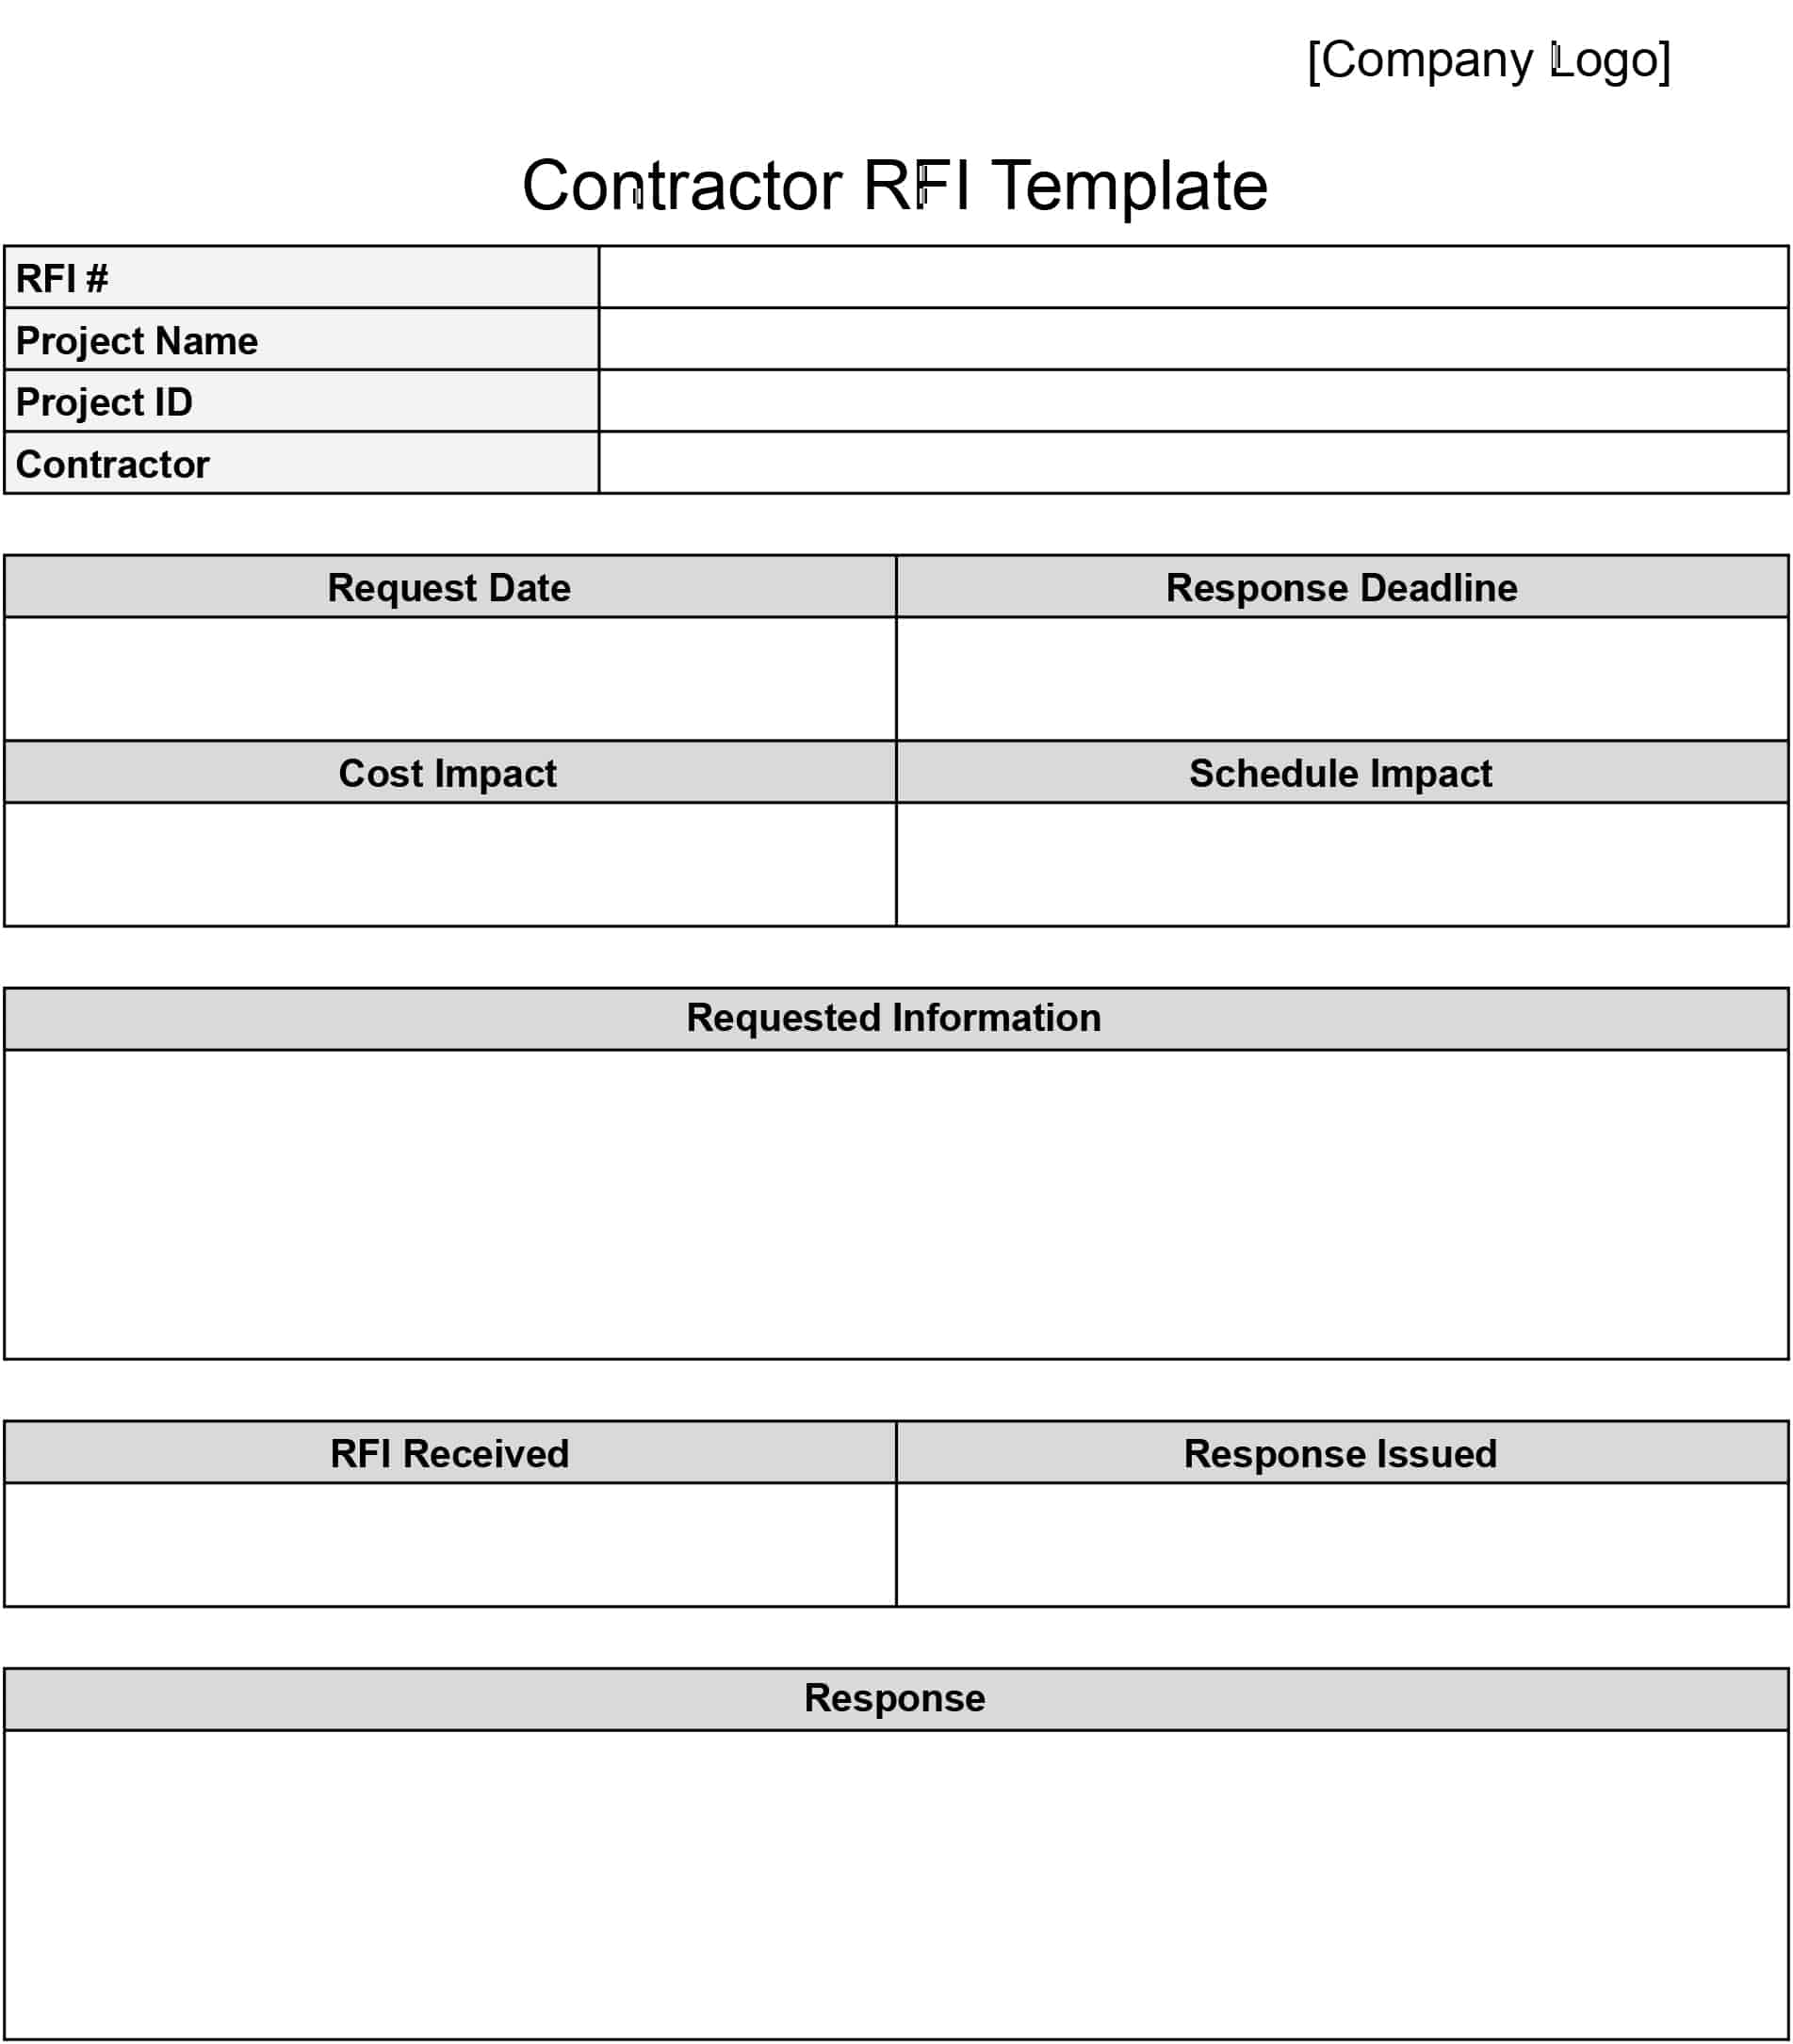 Contractor RFI Template